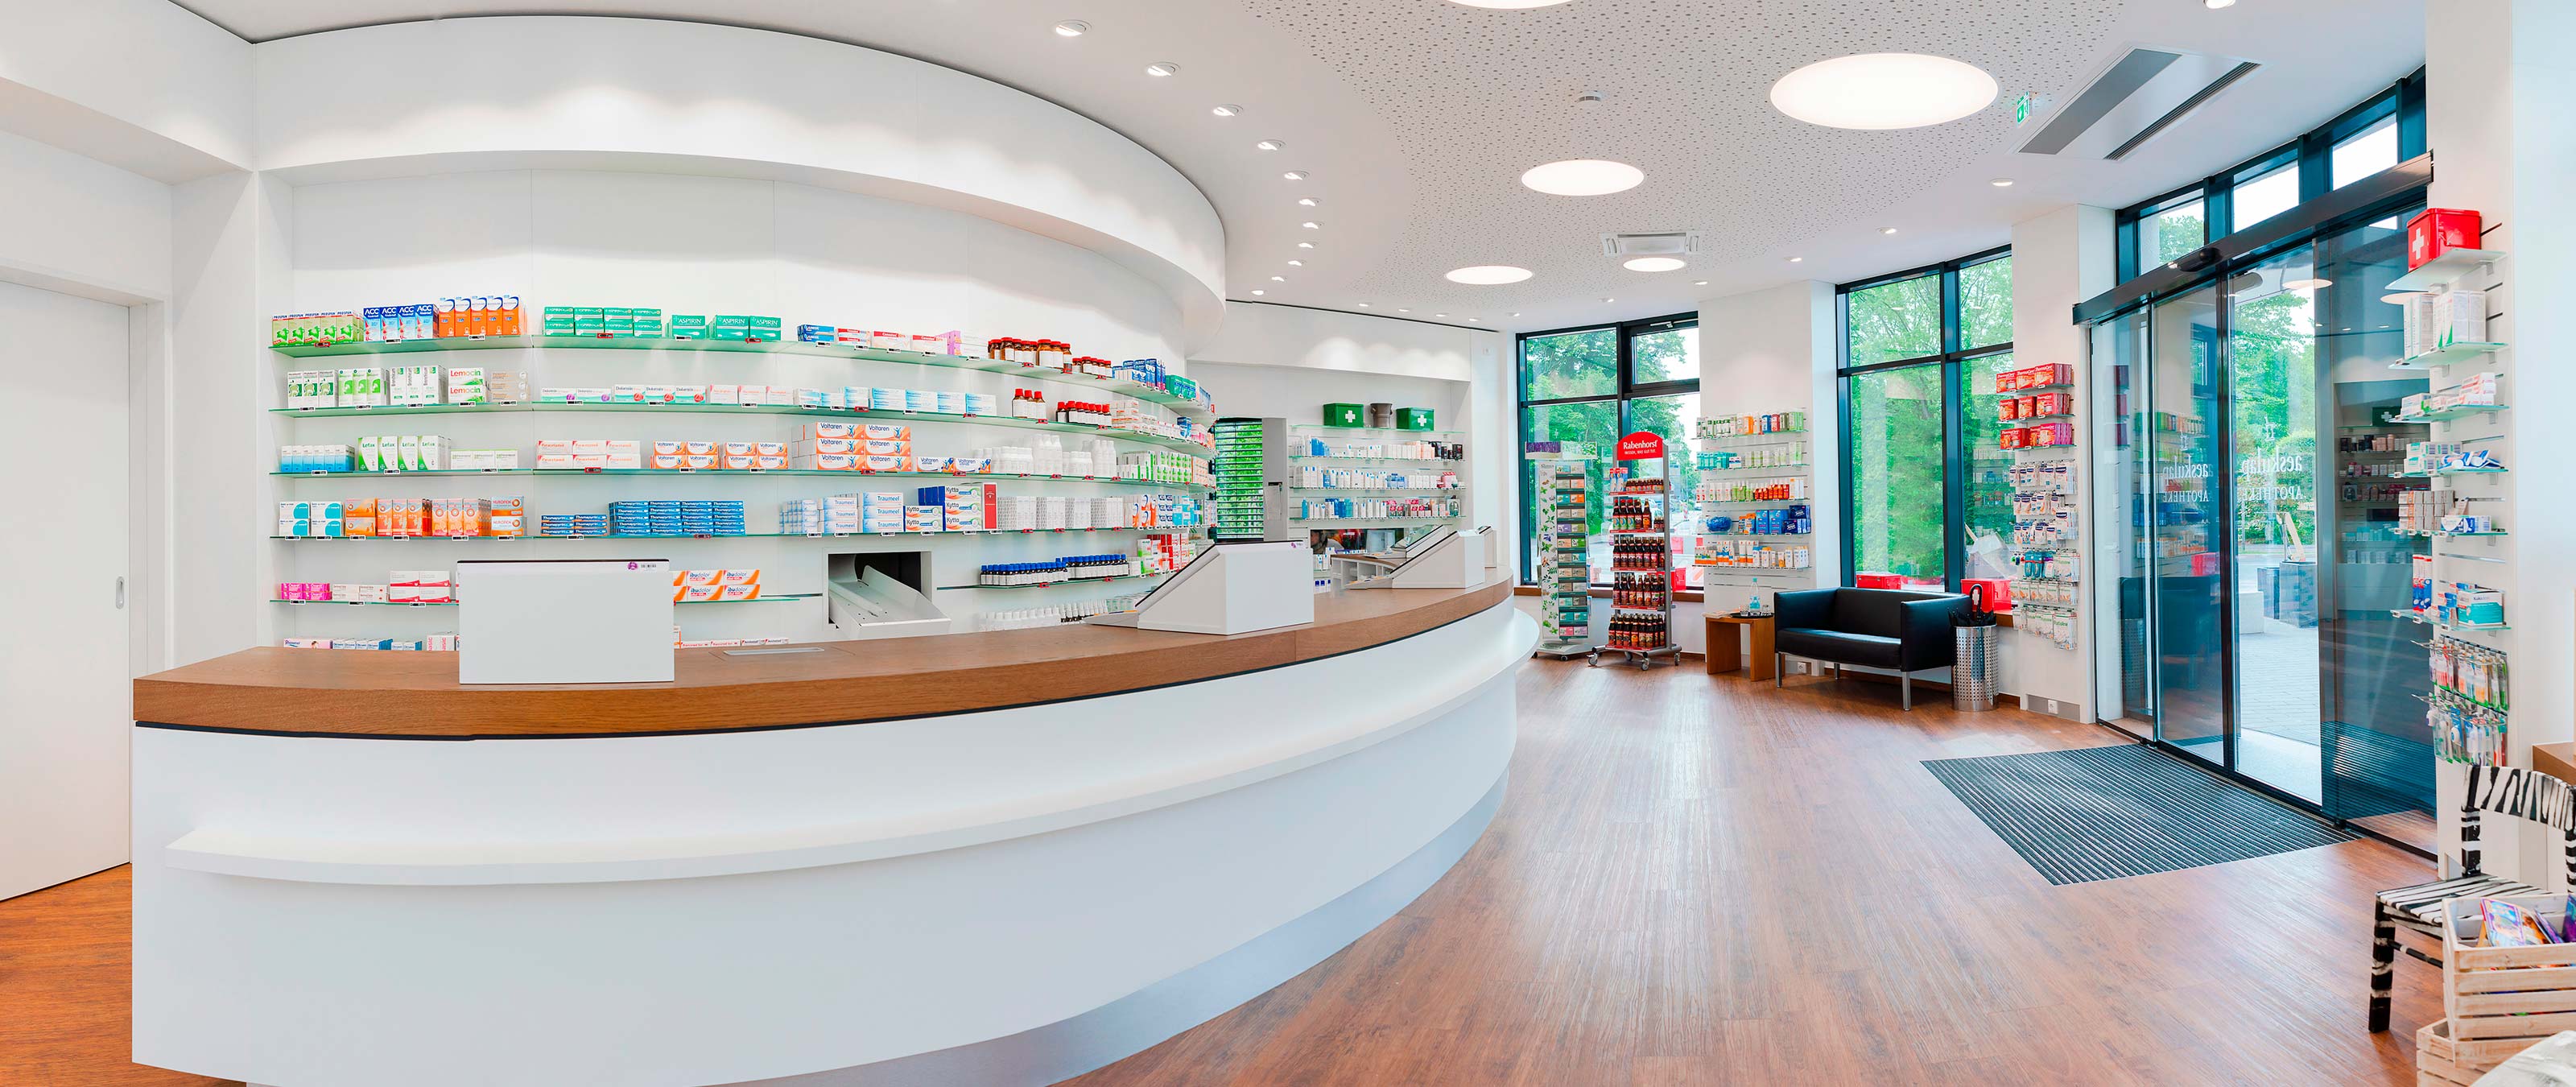 Wiemer Einrichtungen: Area of expertise pharmacy equipment